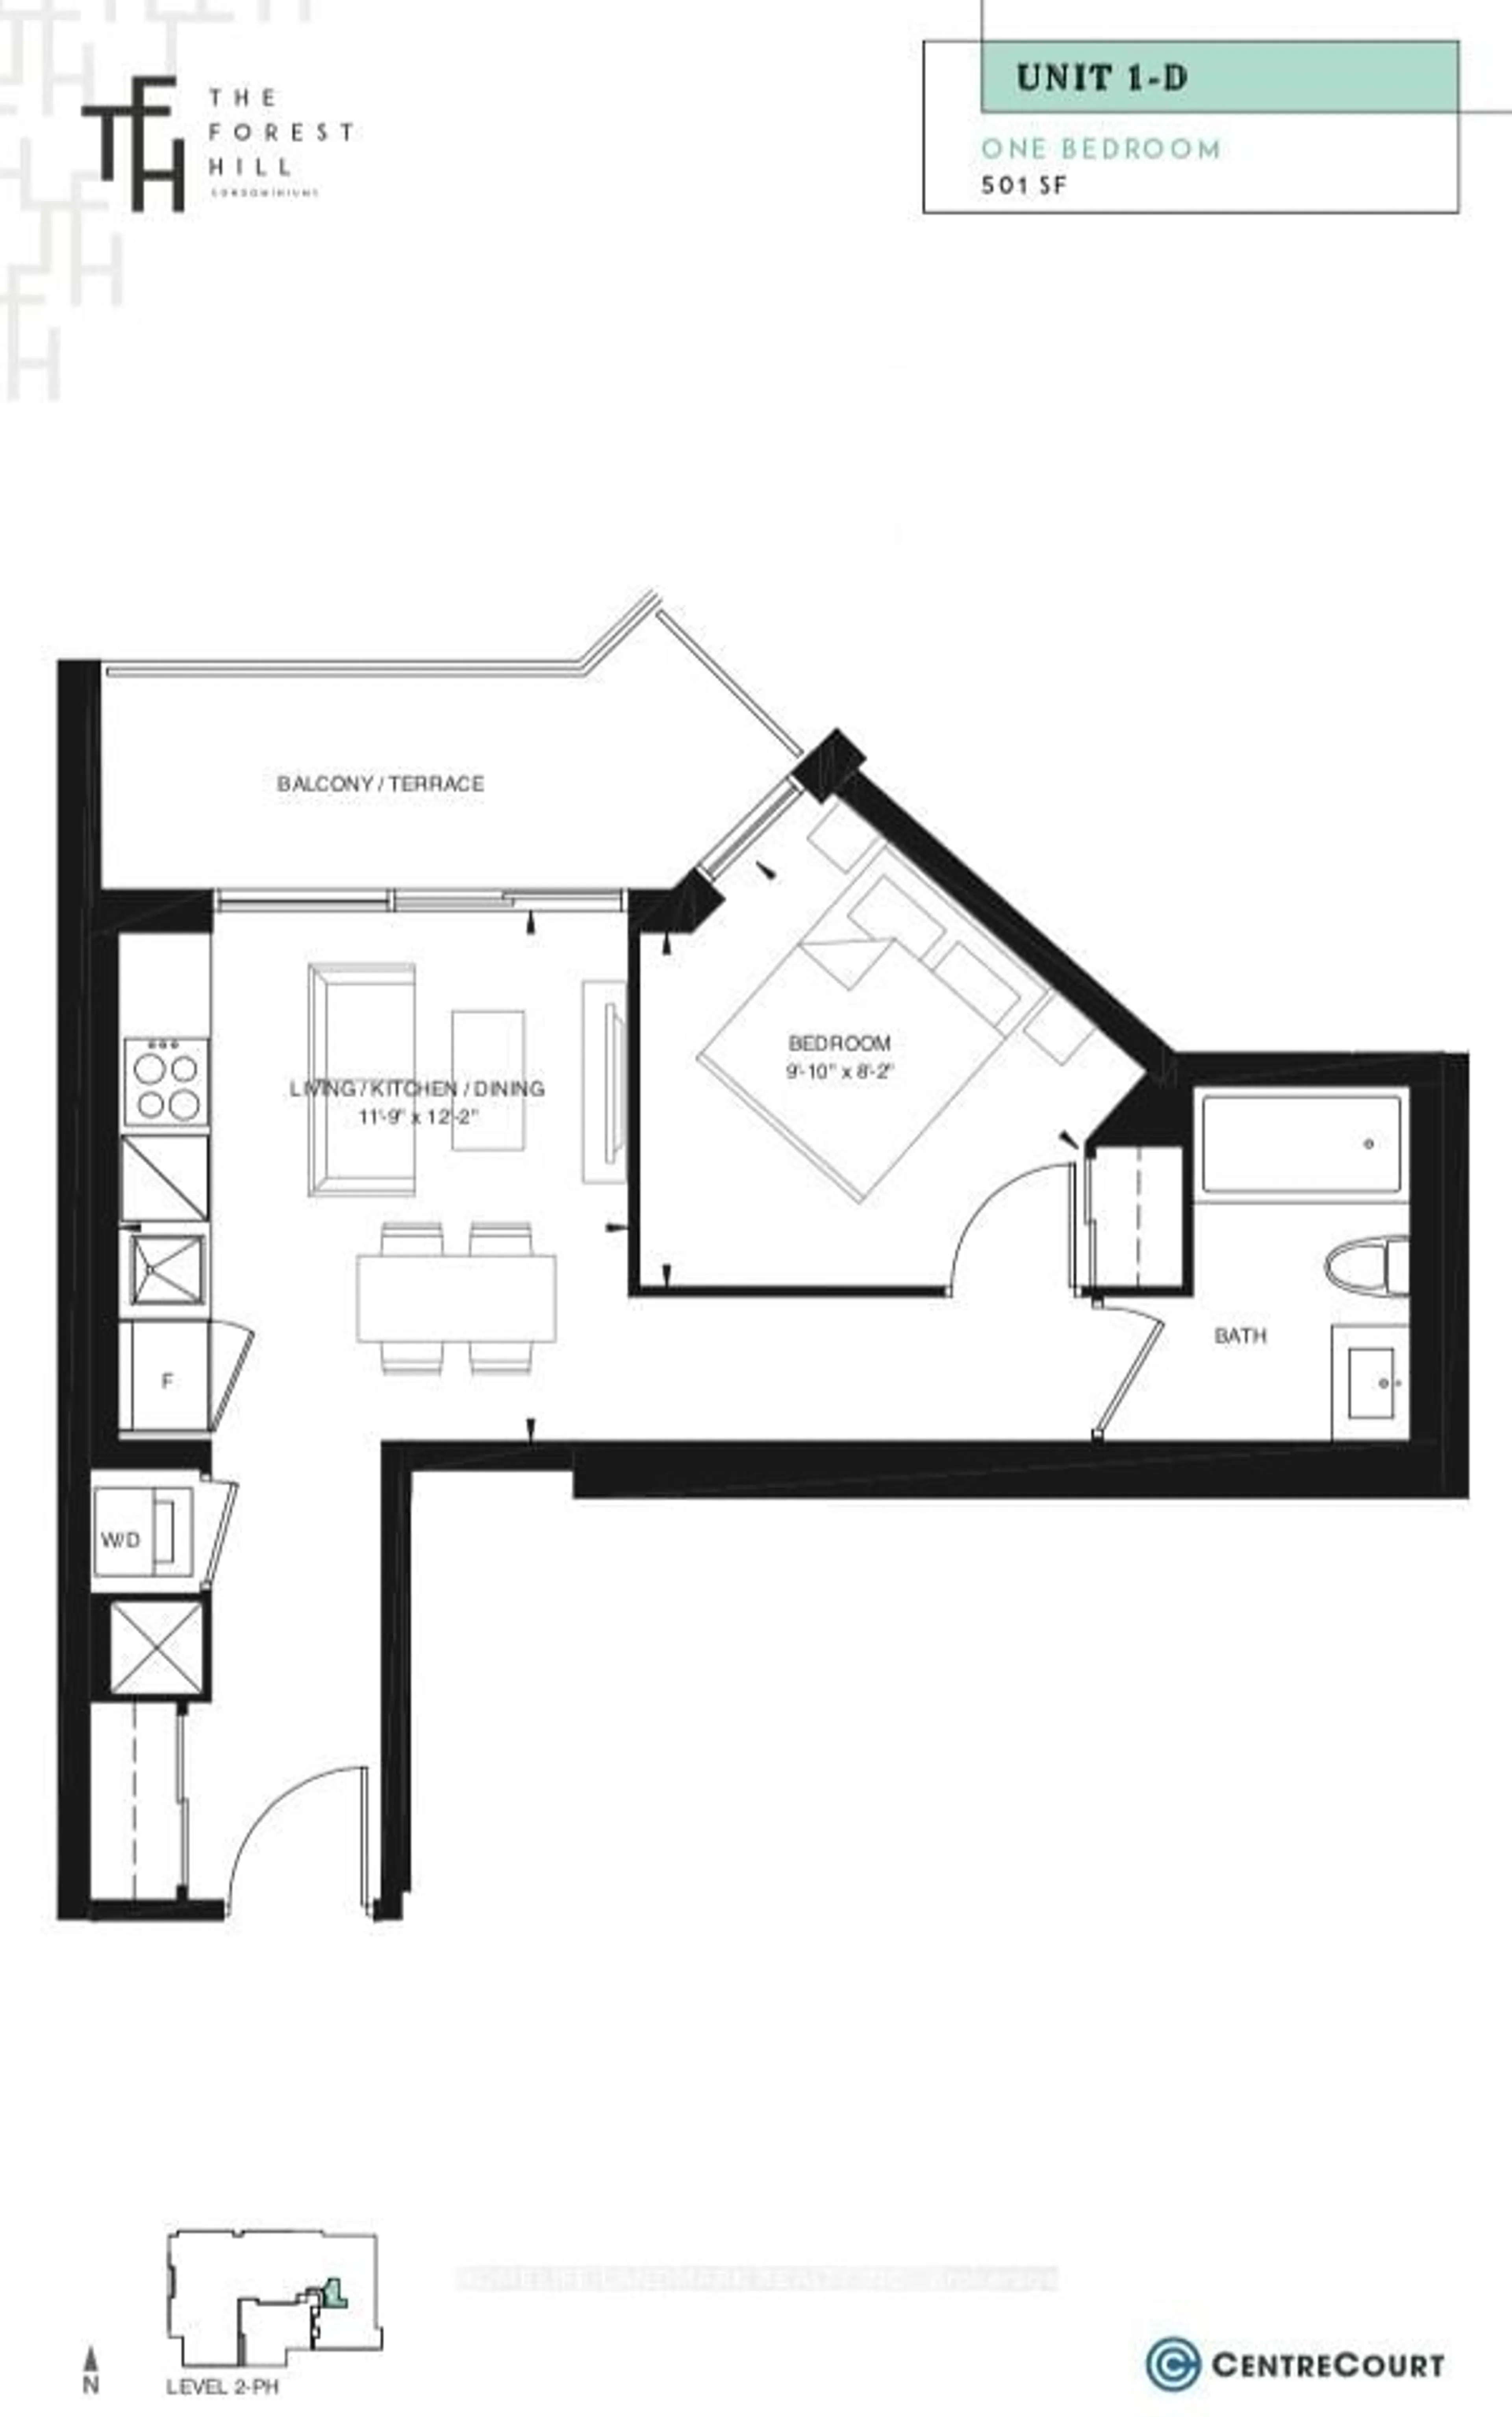 Floor plan for 2020 Bathurst St #1019, Toronto Ontario M5P 0A6